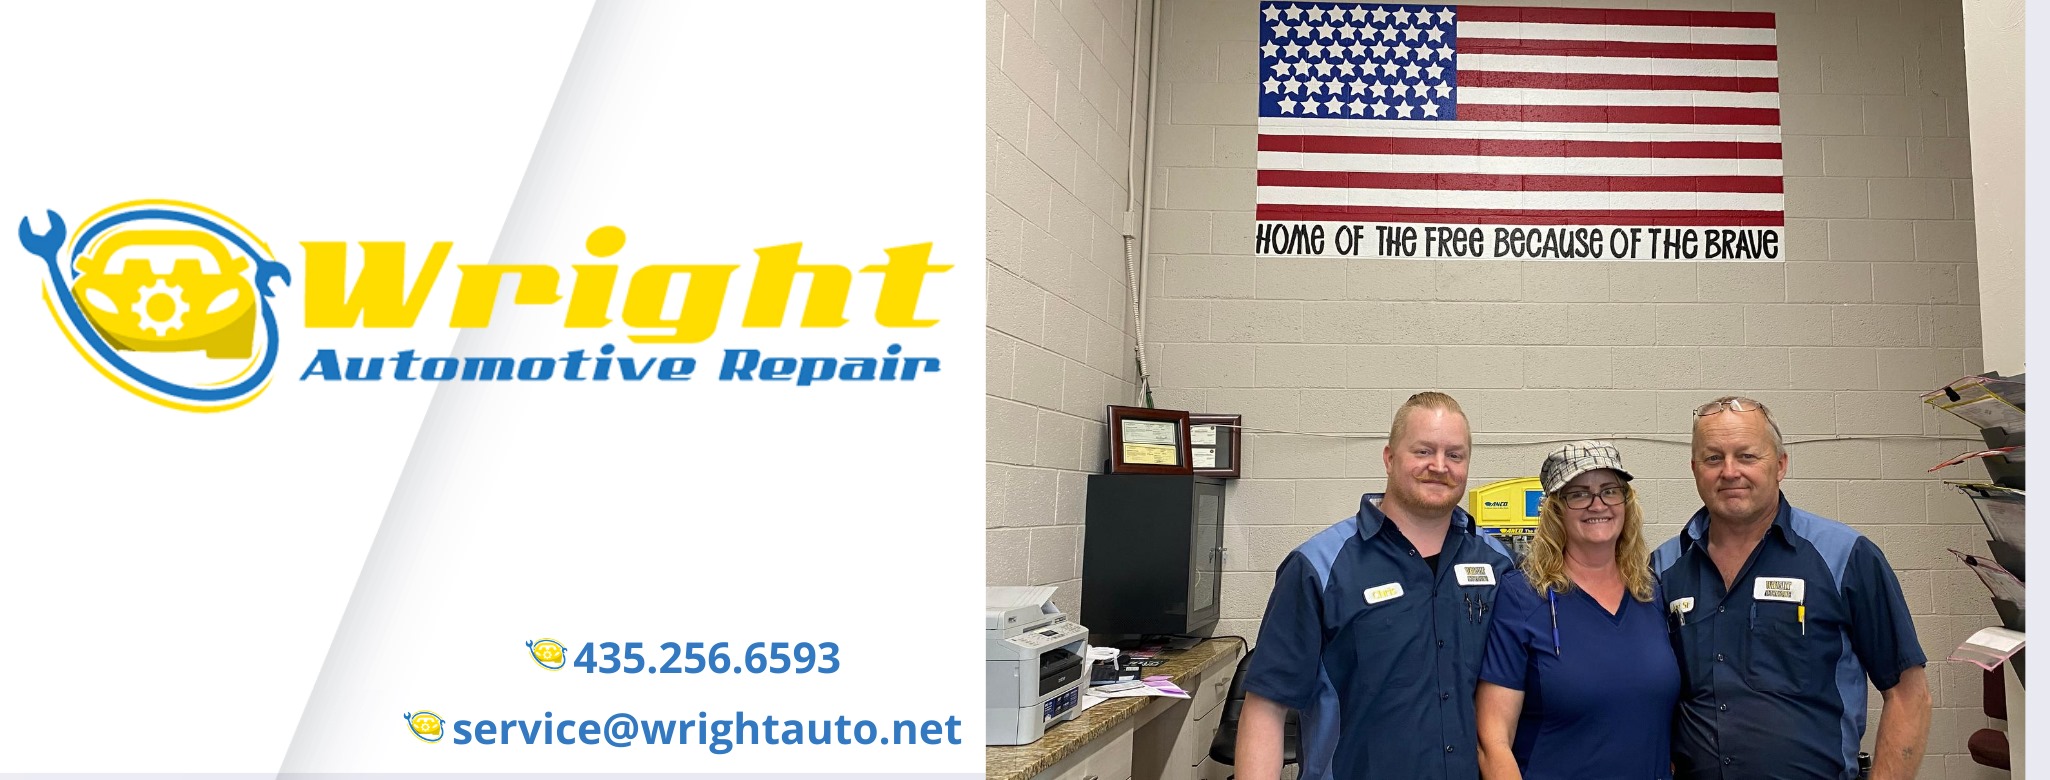 Wright Automotive LLC